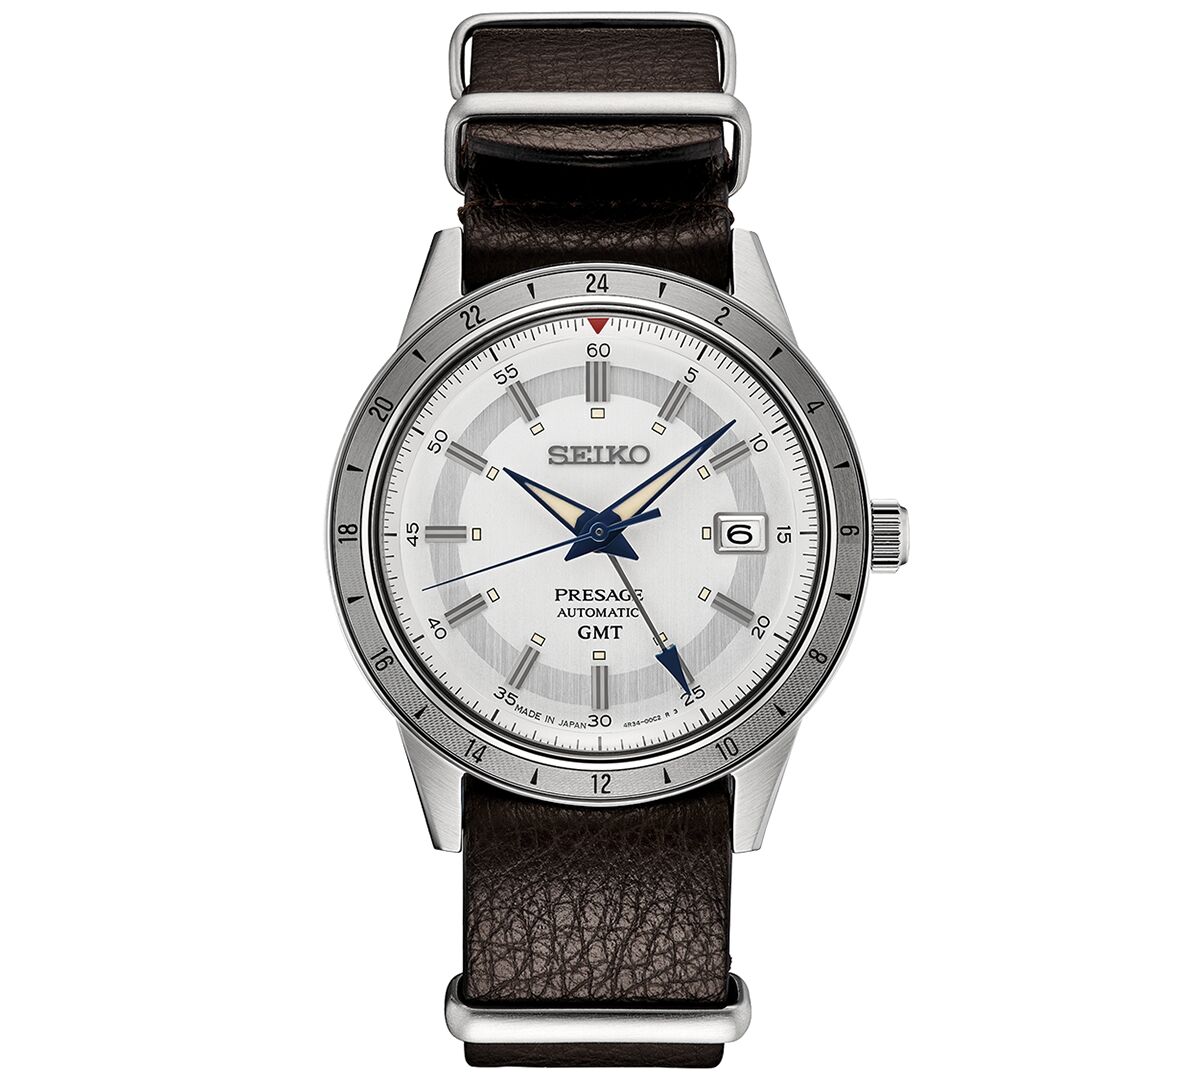 Seiko Men's Automatic Presage Gmt Brown Leather Strap Watch 41mm - White